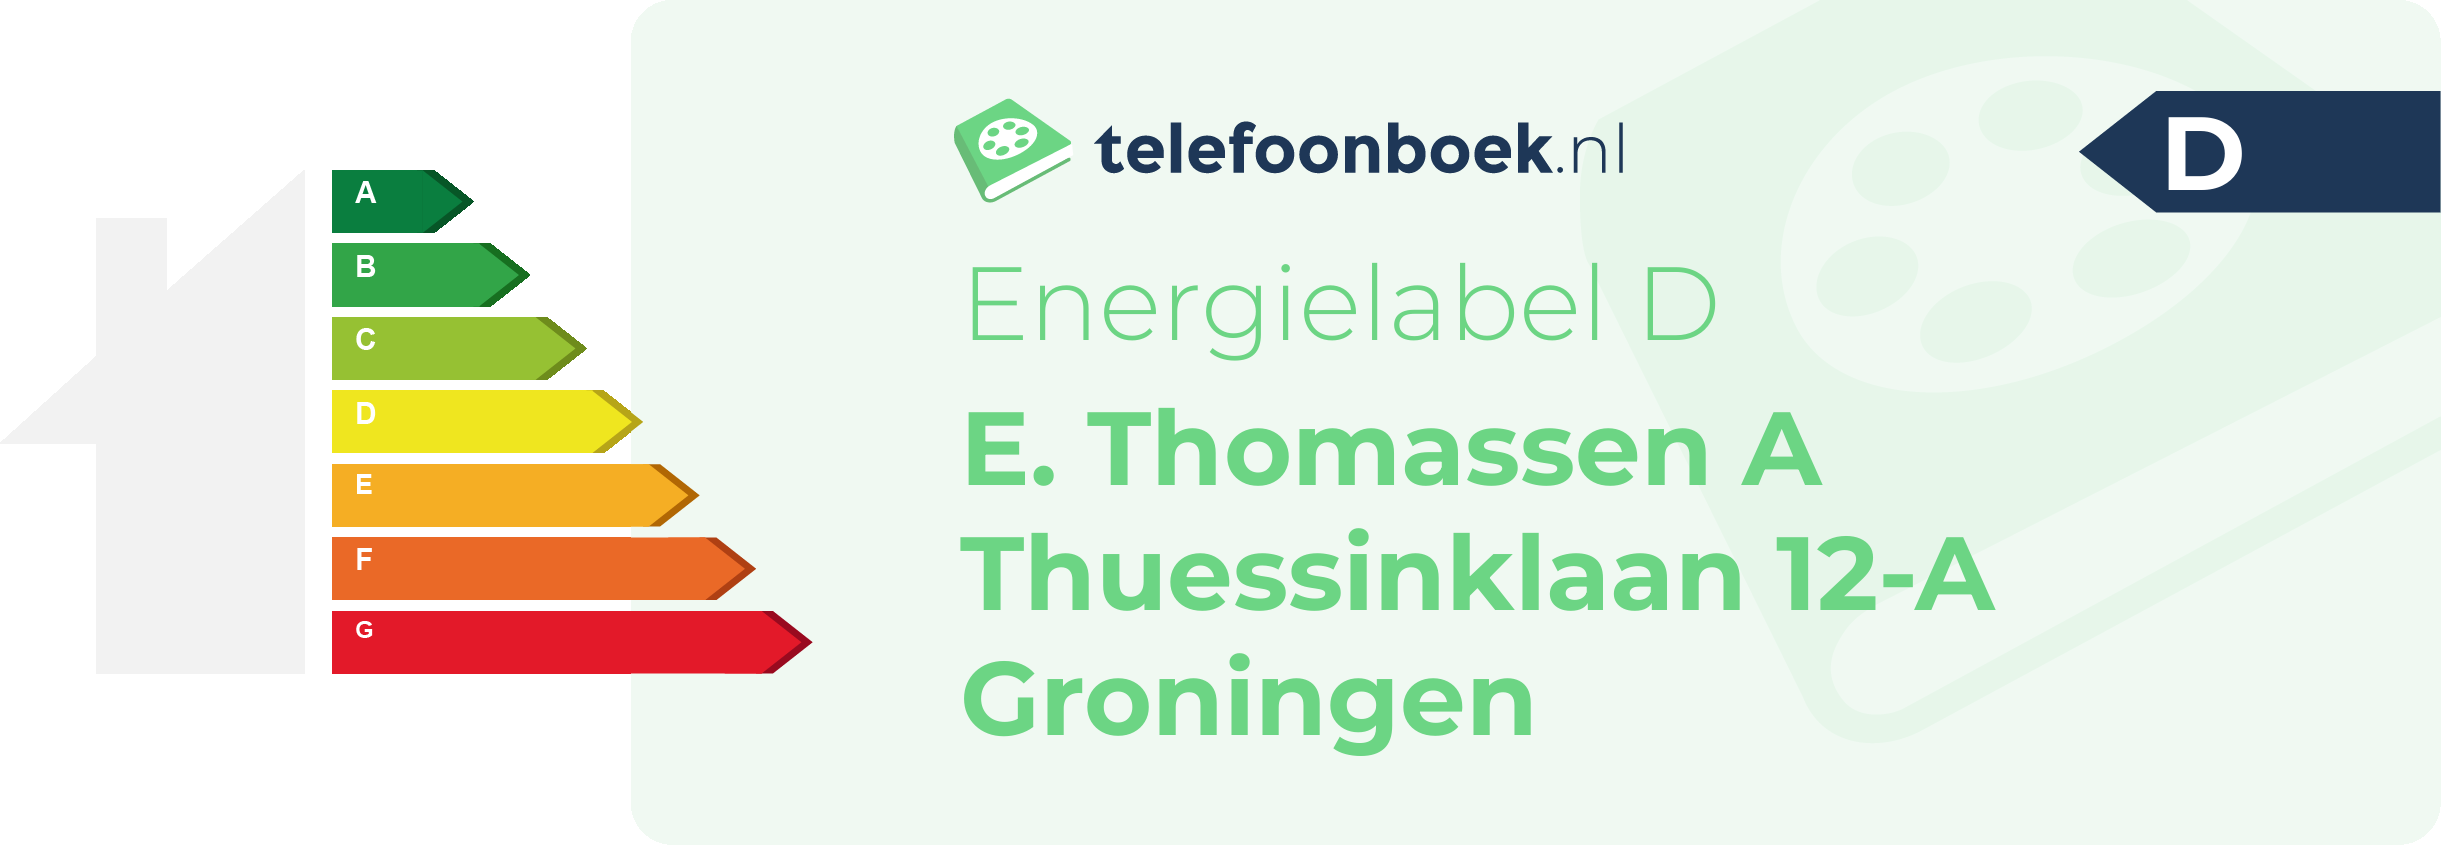 Energielabel E. Thomassen A Thuessinklaan 12-A Groningen